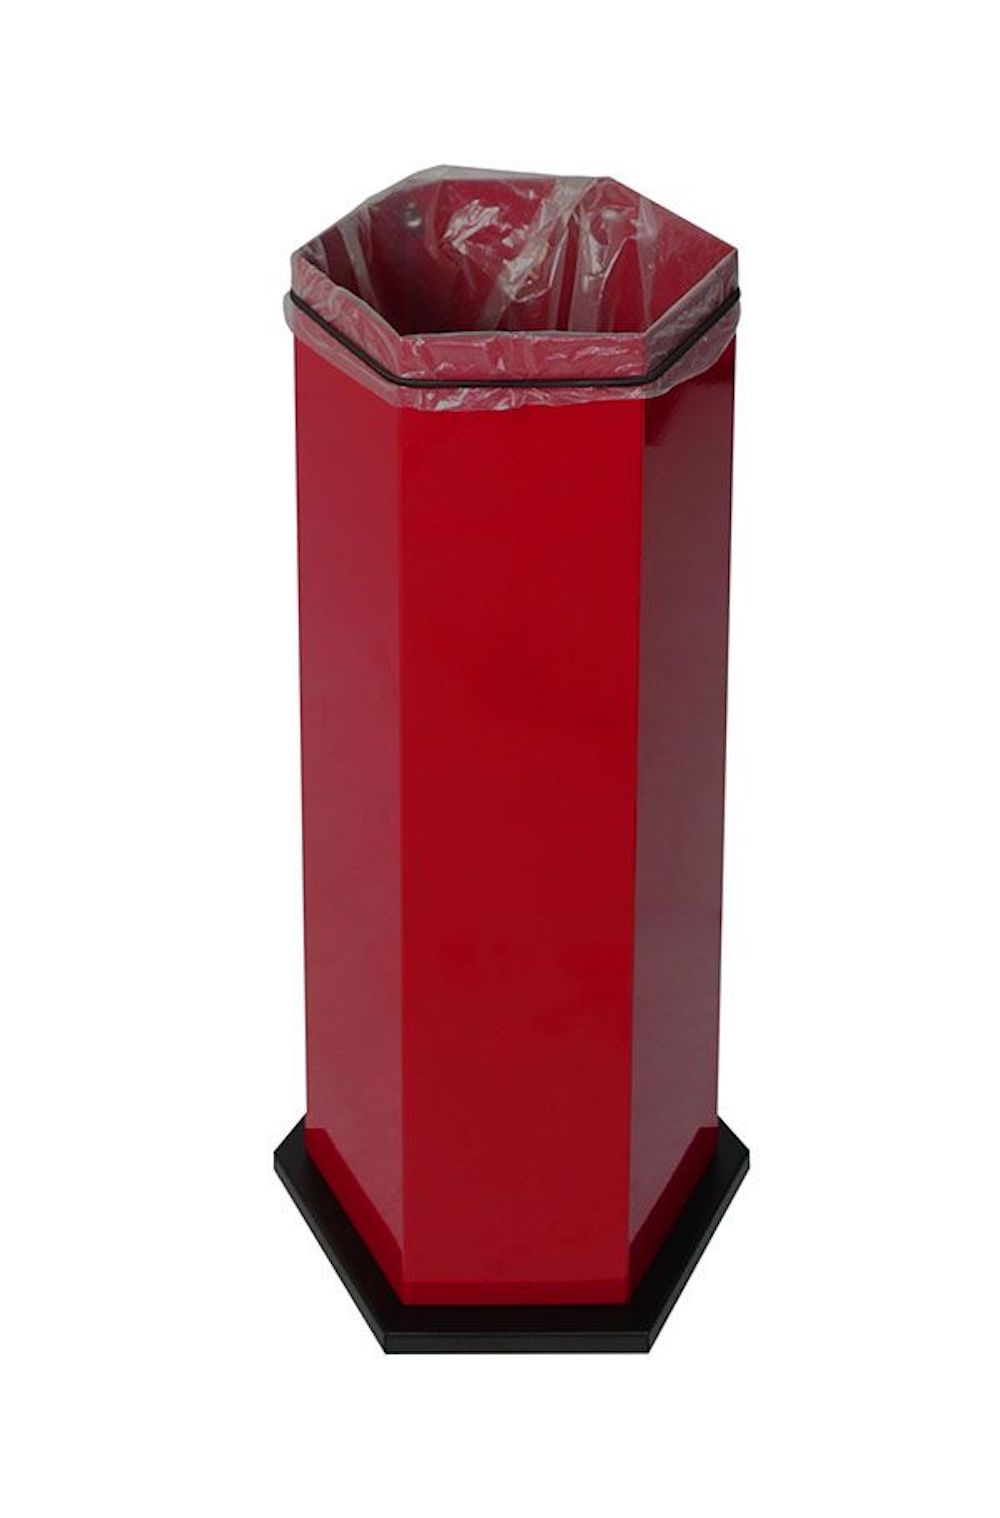 Abfallsammler mit Edelstahl-Einwurfklappe & Touchless-Öffnungsautomatik | 45 Liter, HxBxT 83x33x38cm | inkl. Ladegerät | Rubinrot